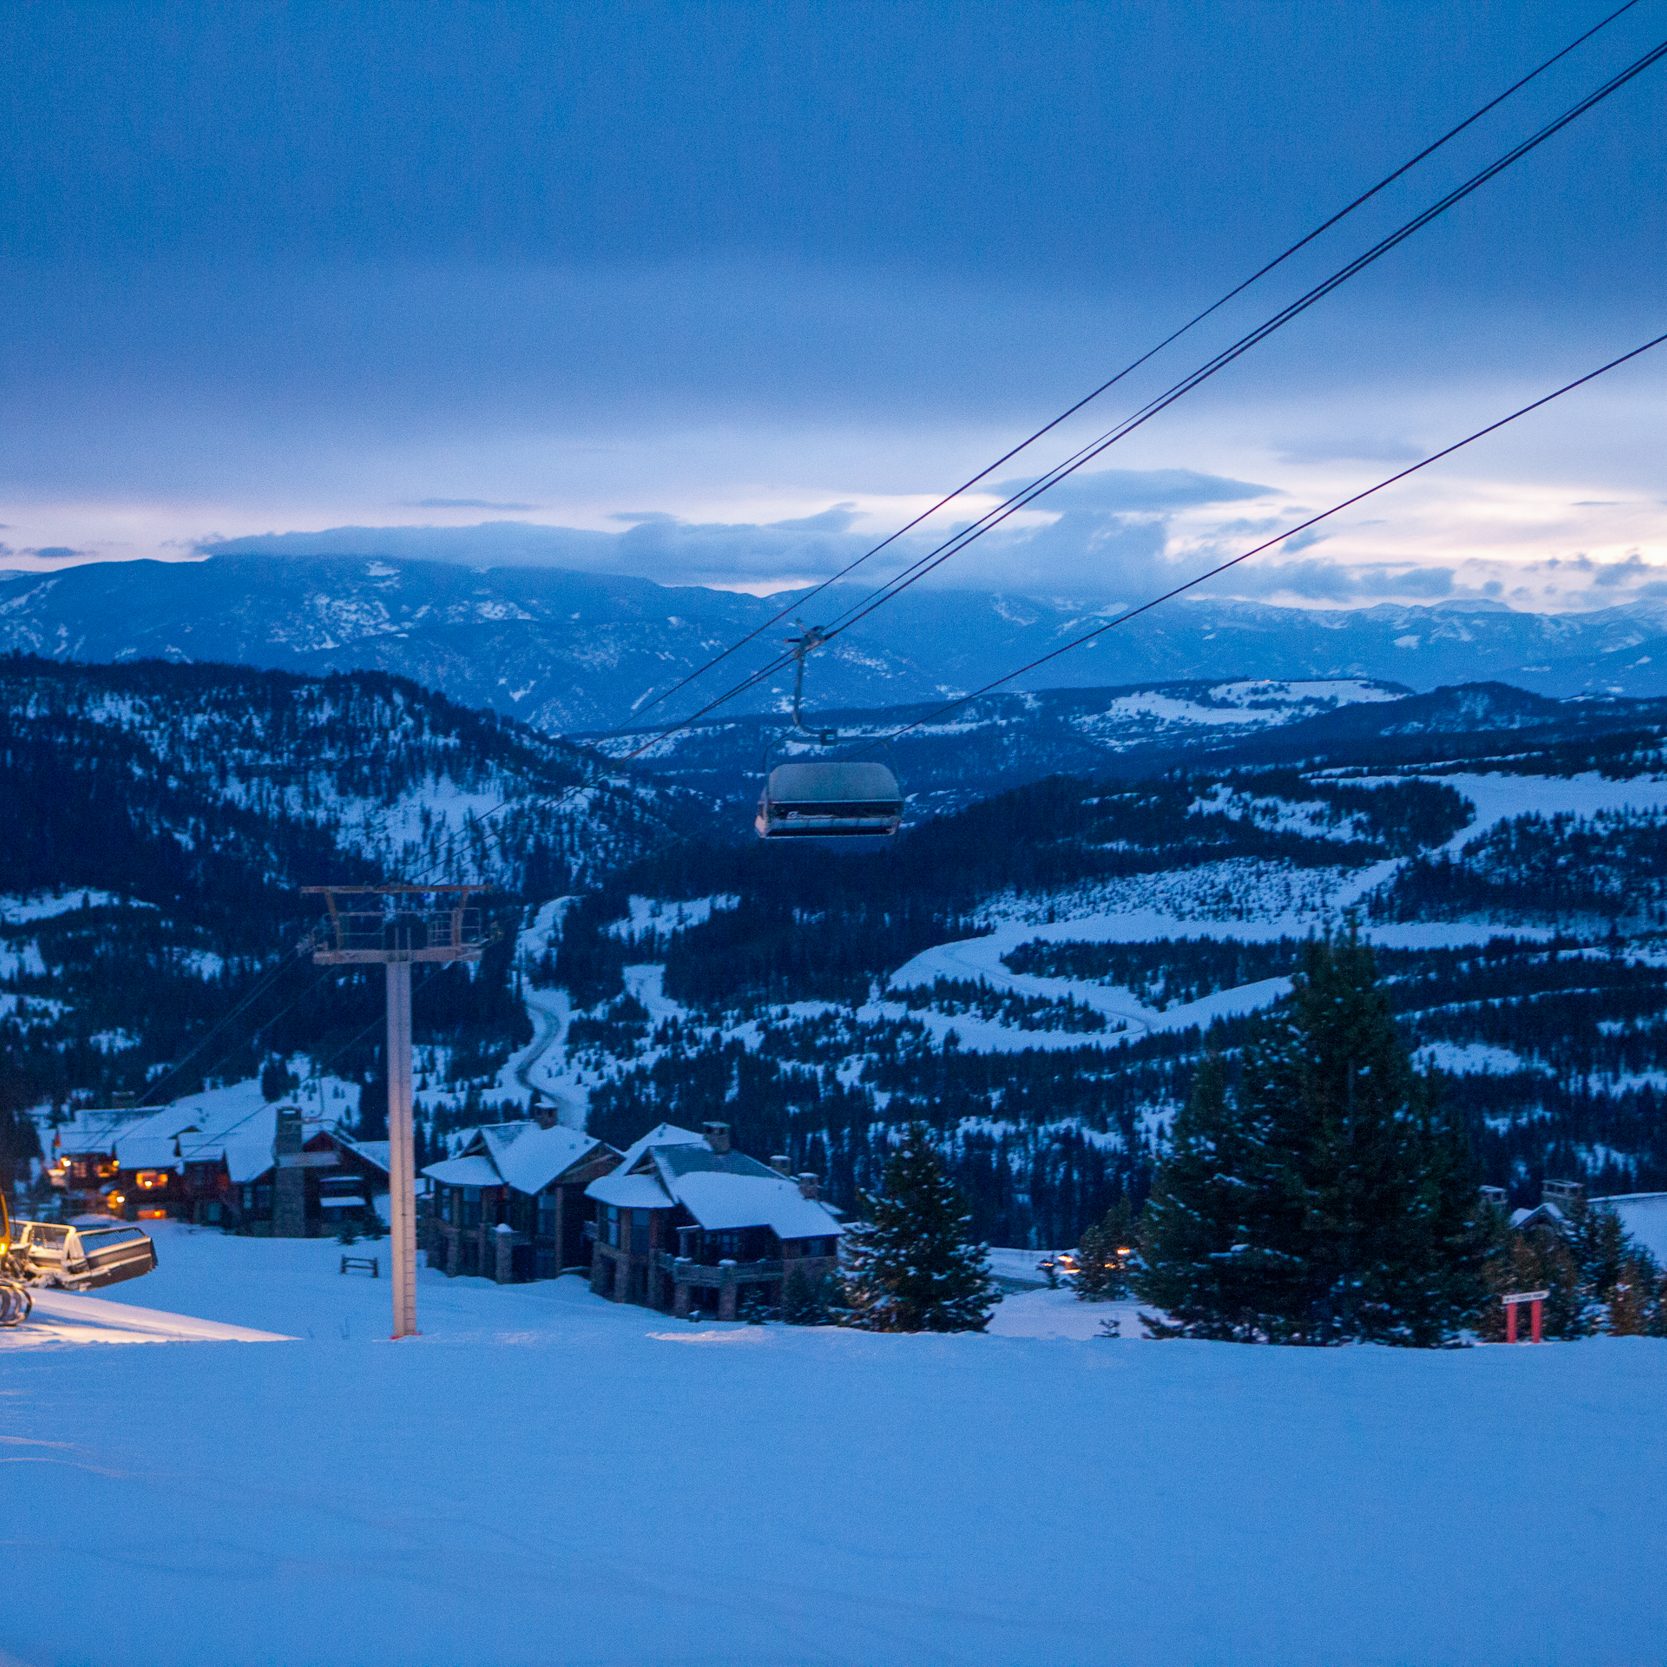 Skii lifts and view at Yellowstone Club. | Tom Erickson/via Flickr